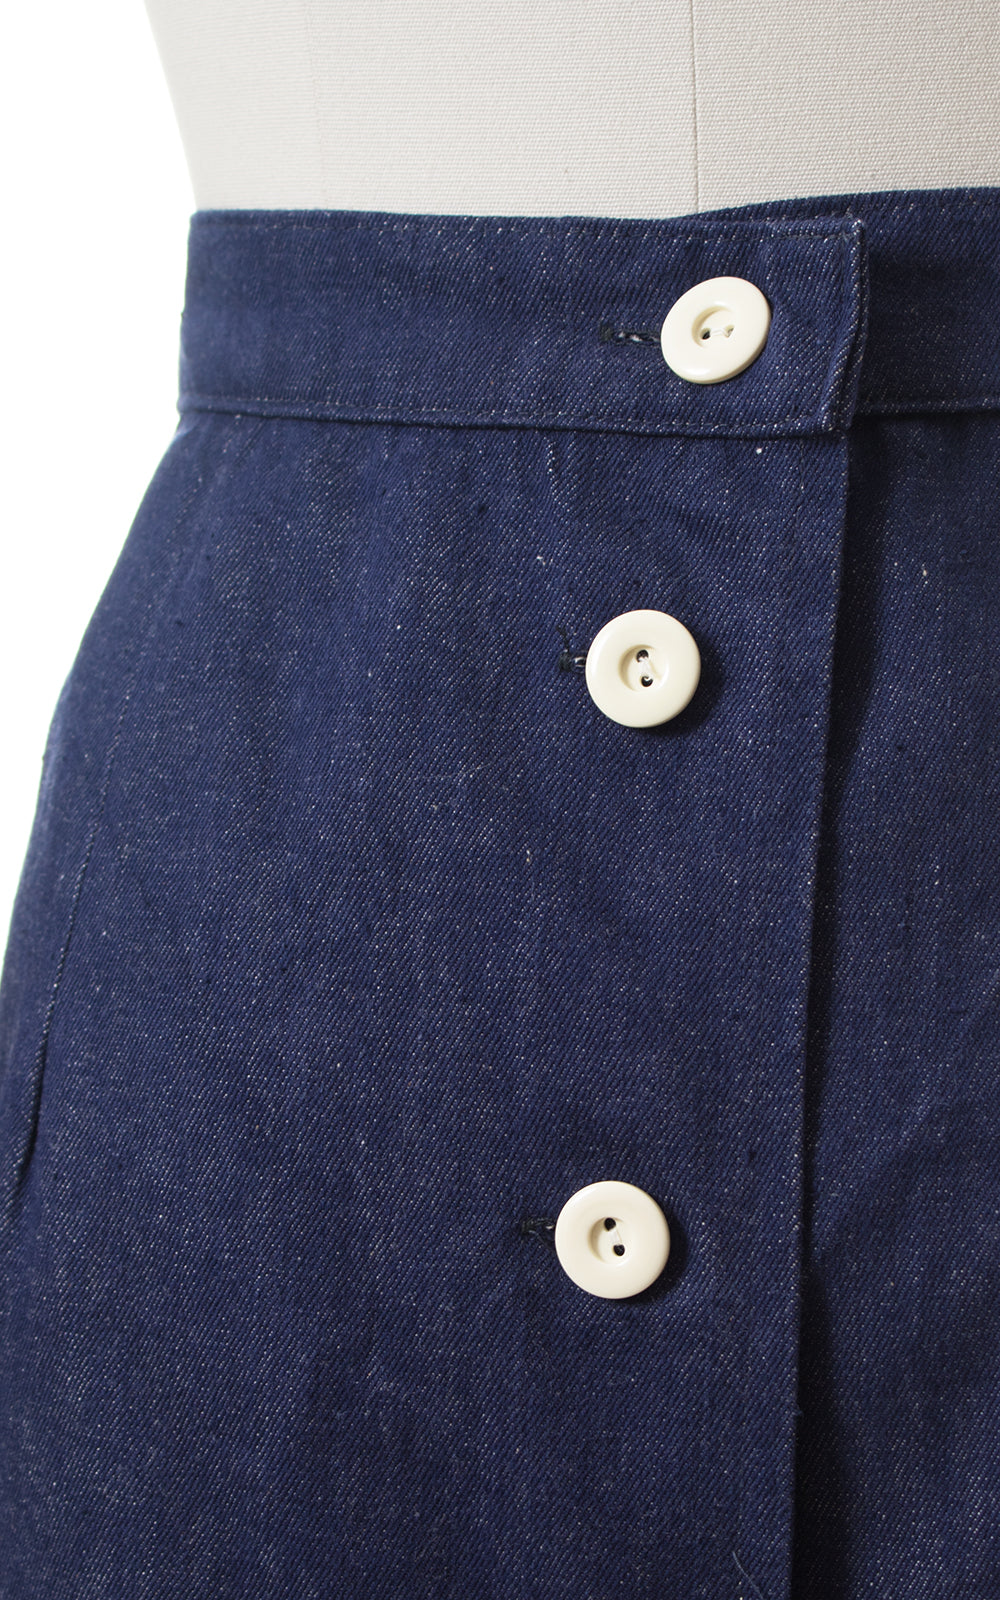 1970s Floral Embroidered Button Back Denim Skirt